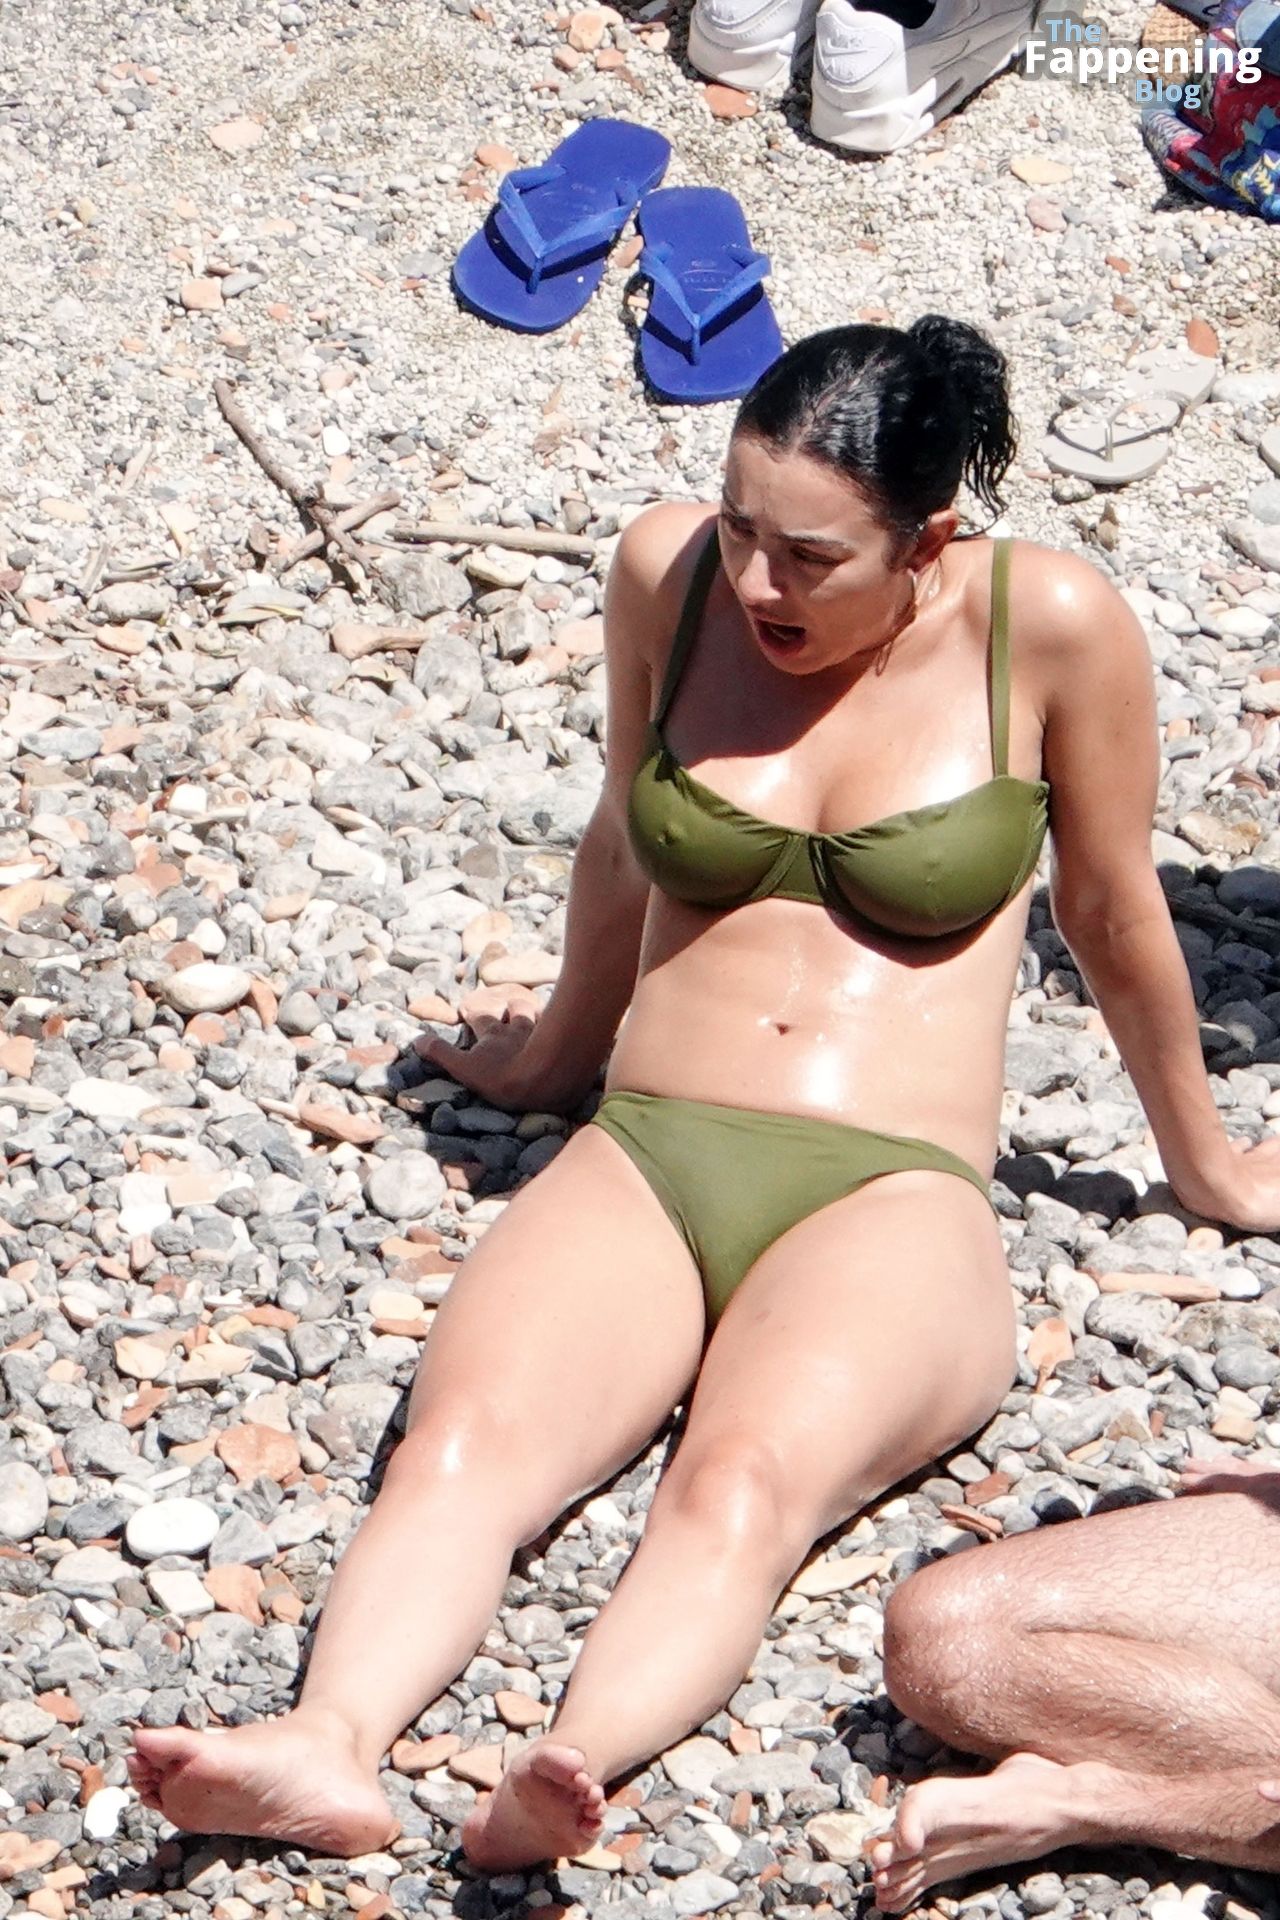 Charli XCX Shows Off Her Voluptuous Figure Wearing Her Skimpy Little Green Bikini (92 Photos)